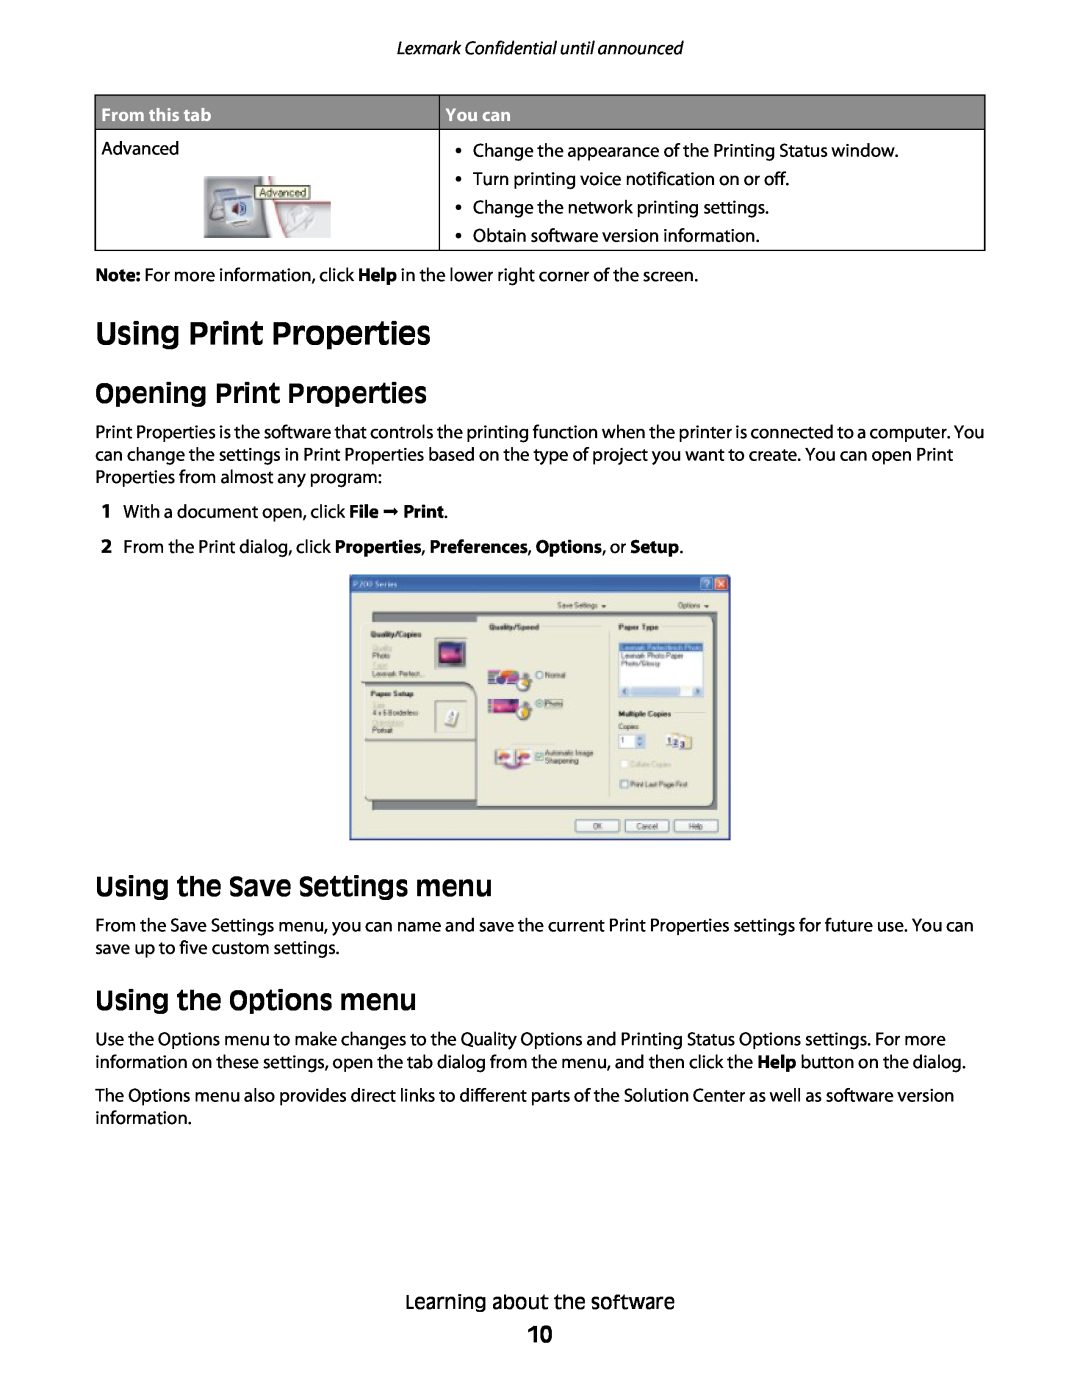 Lexmark P200 manual Using Print Properties, Opening Print Properties, Using the Save Settings menu, Using the Options menu 